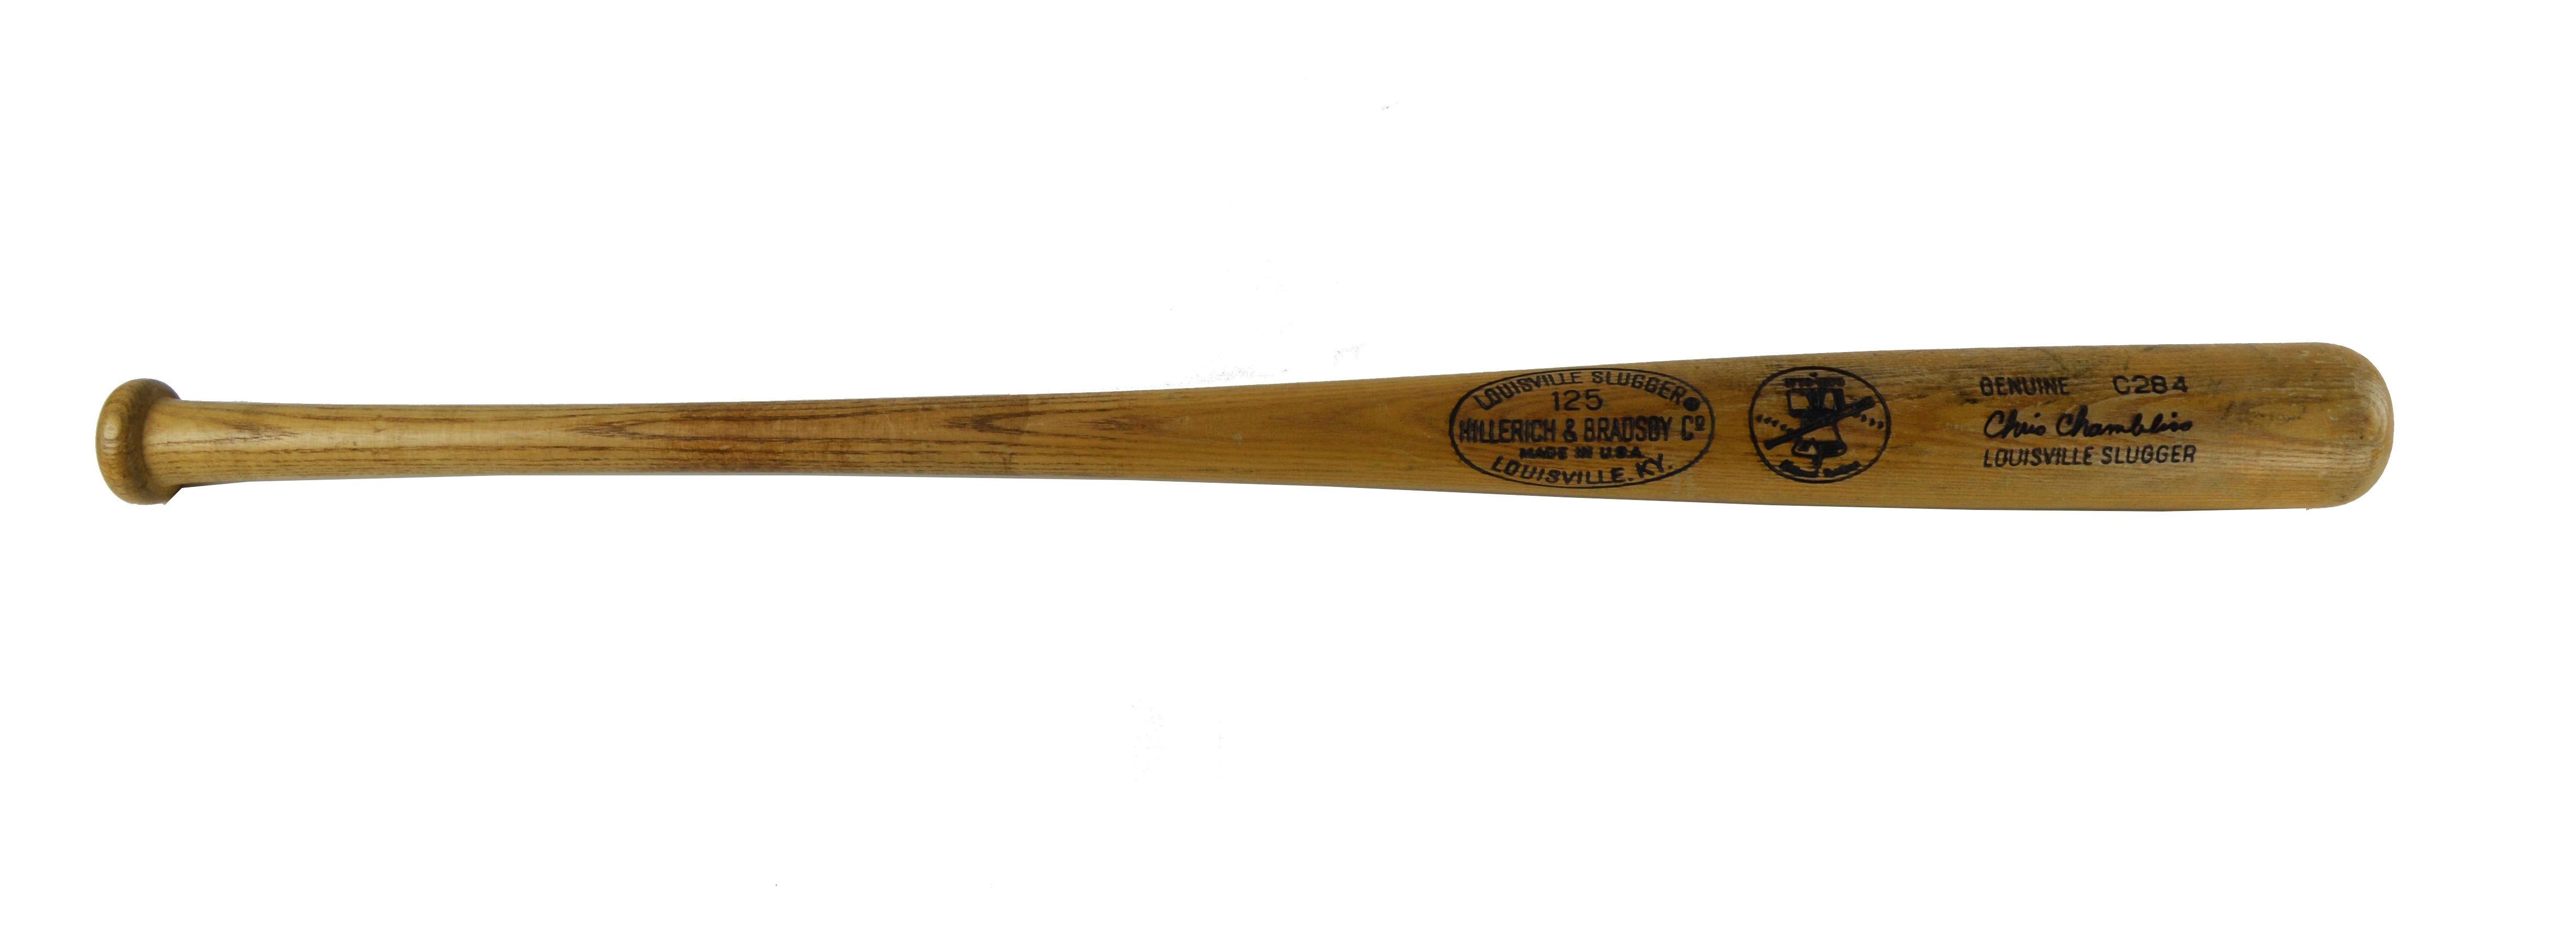 free clip art of baseball bat - photo #36